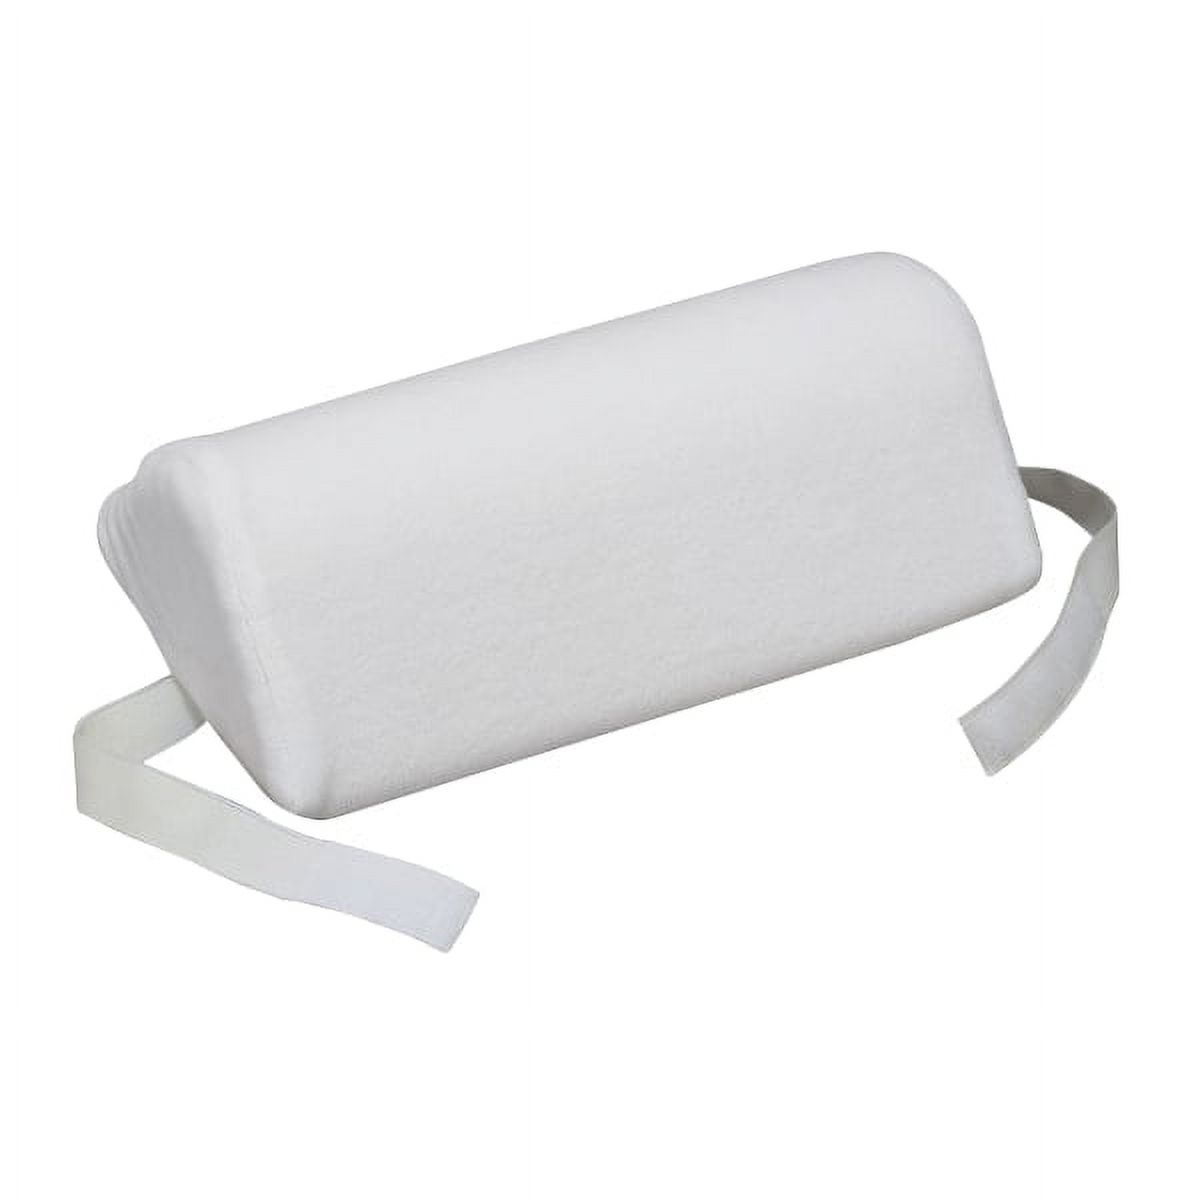 HealthSmart® Portable Headrest Pillow, 11 1/2"H x 7 1/2"W x 4"D, White - image 1 of 1